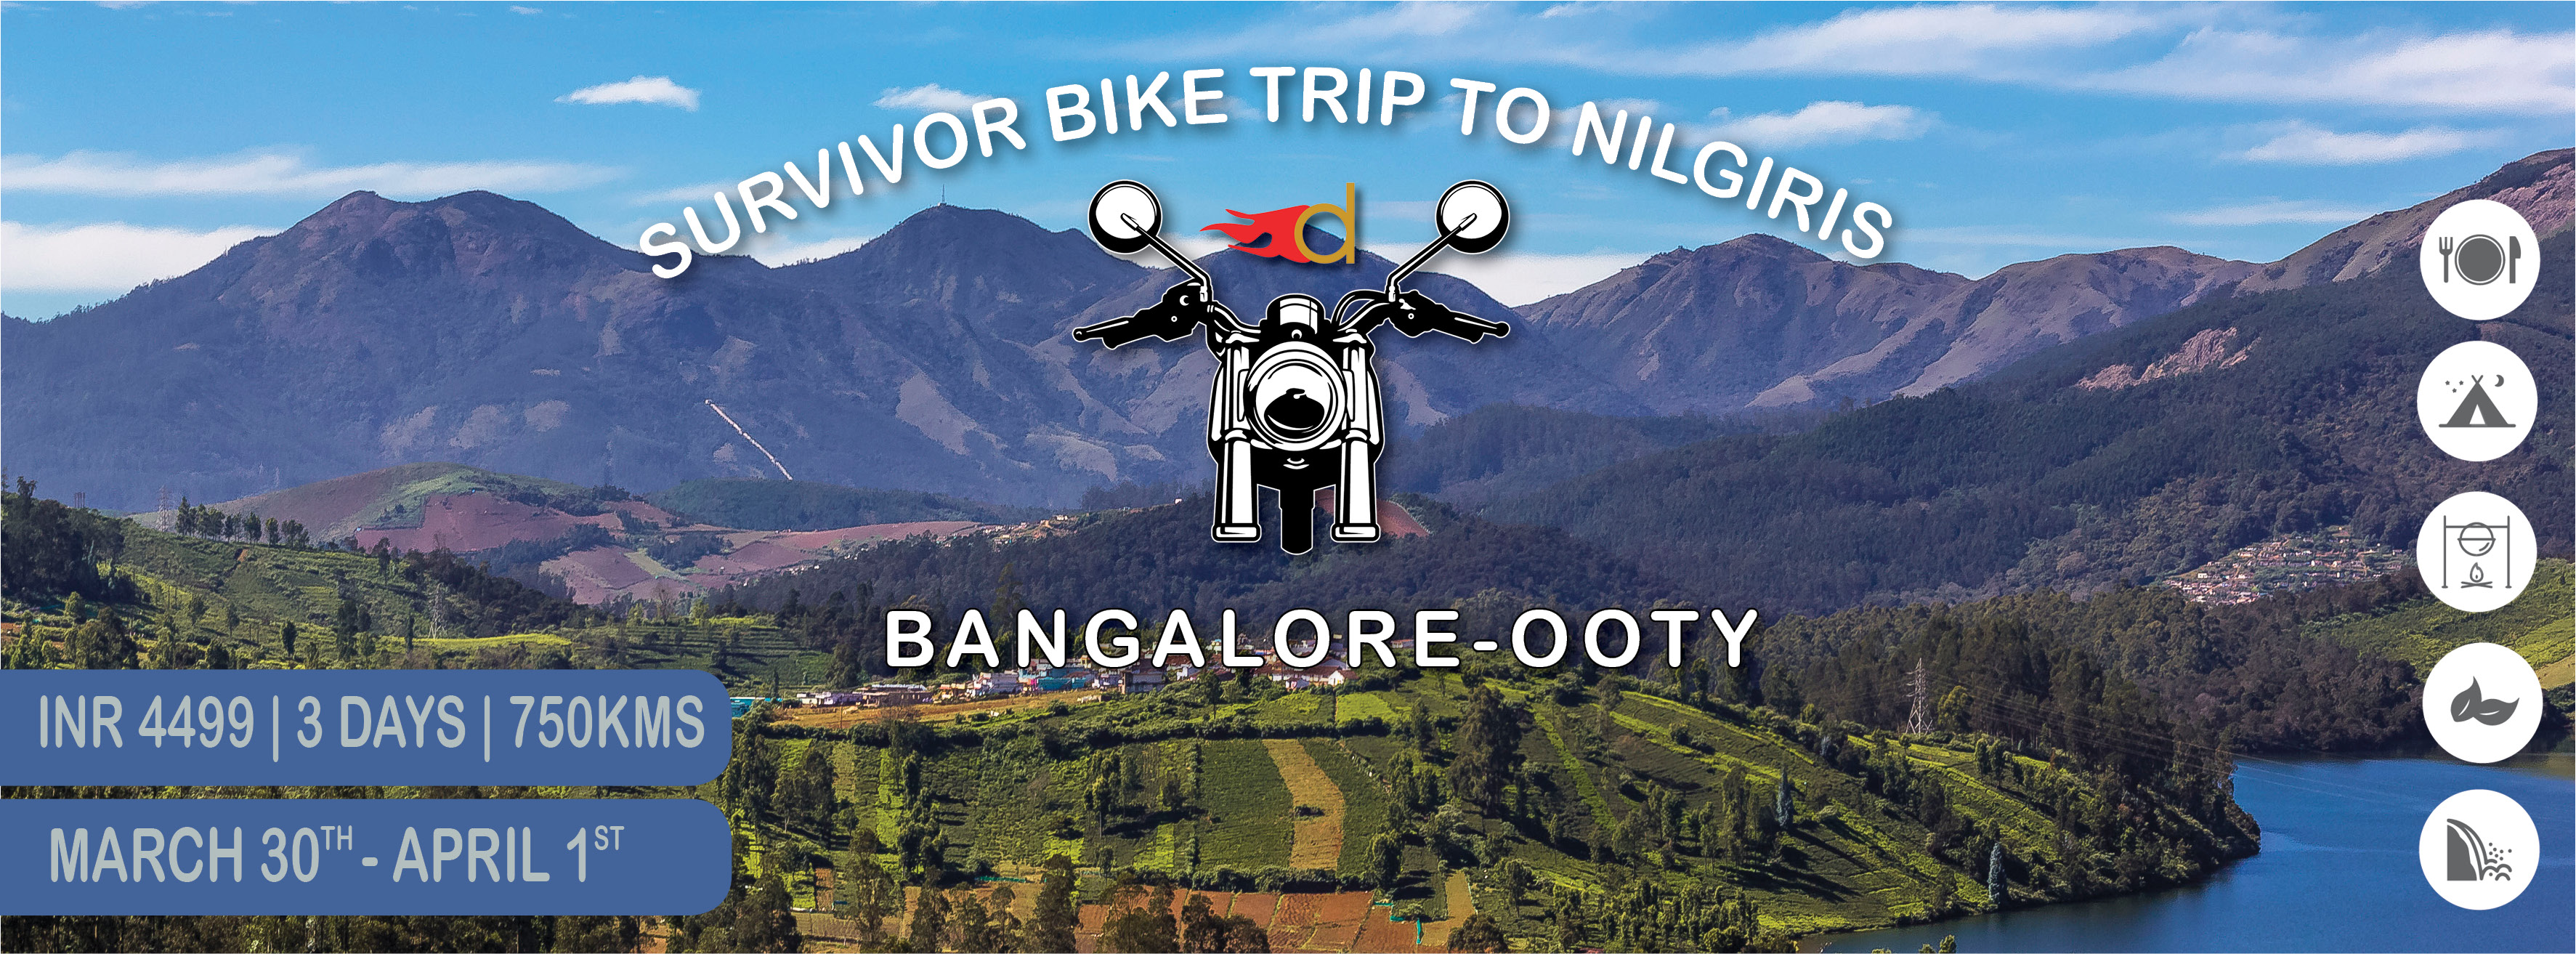 BIKE TRIP TO OOTY, Bangalore, Karnataka, India